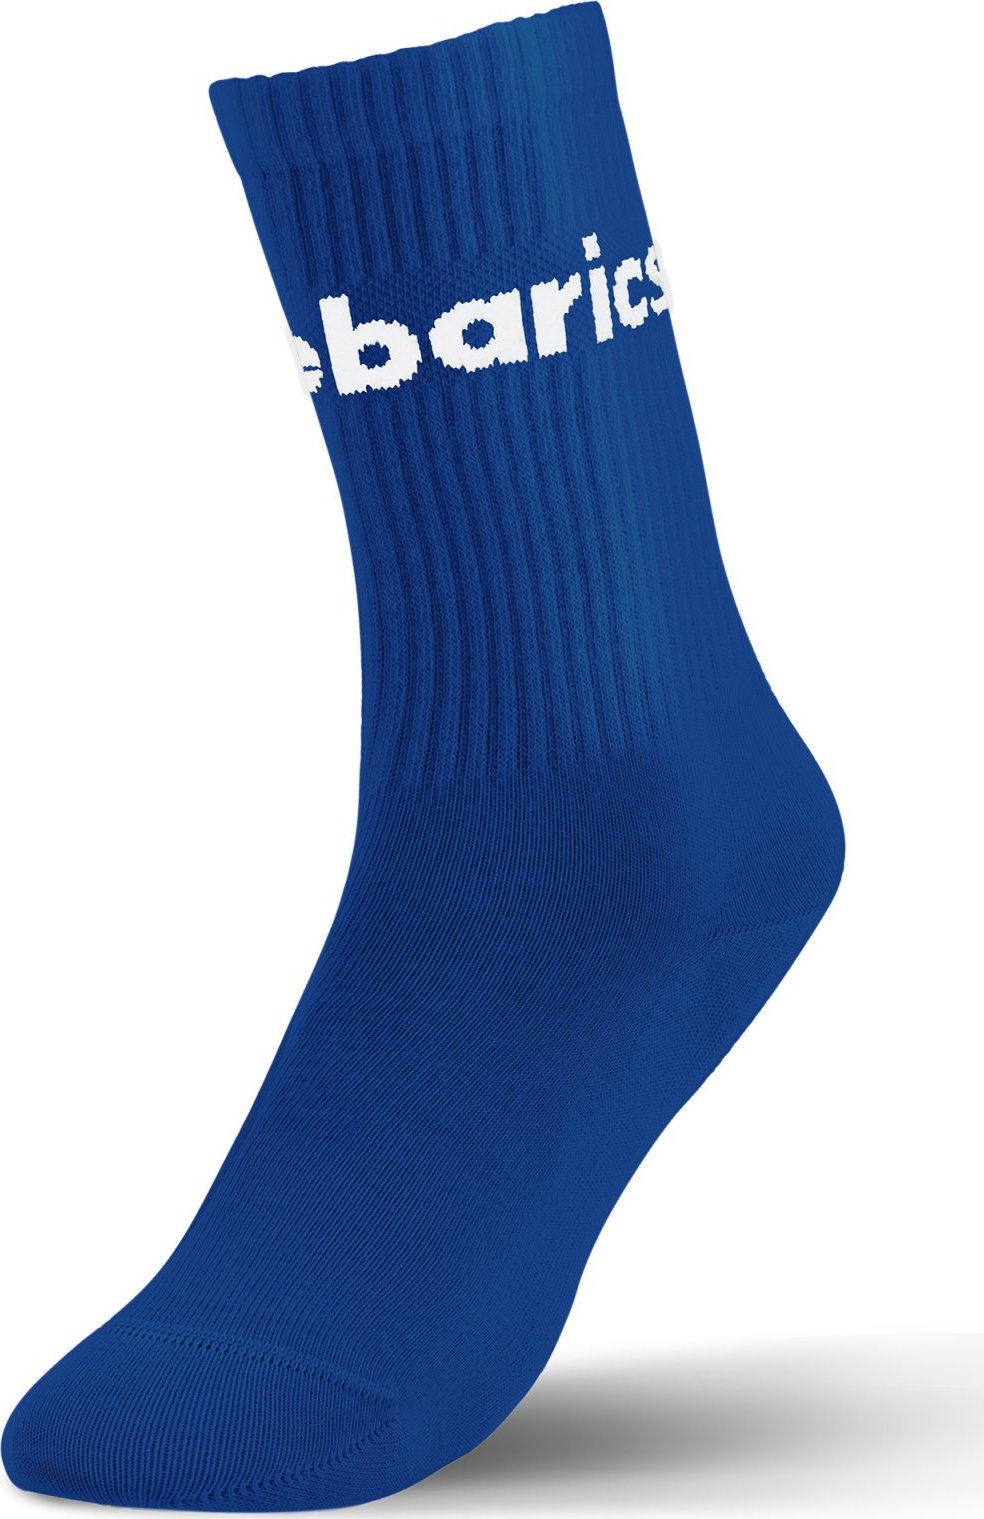 Barefootové ponožky Barebarics Crew modrá Big logo Velikost: 39-42